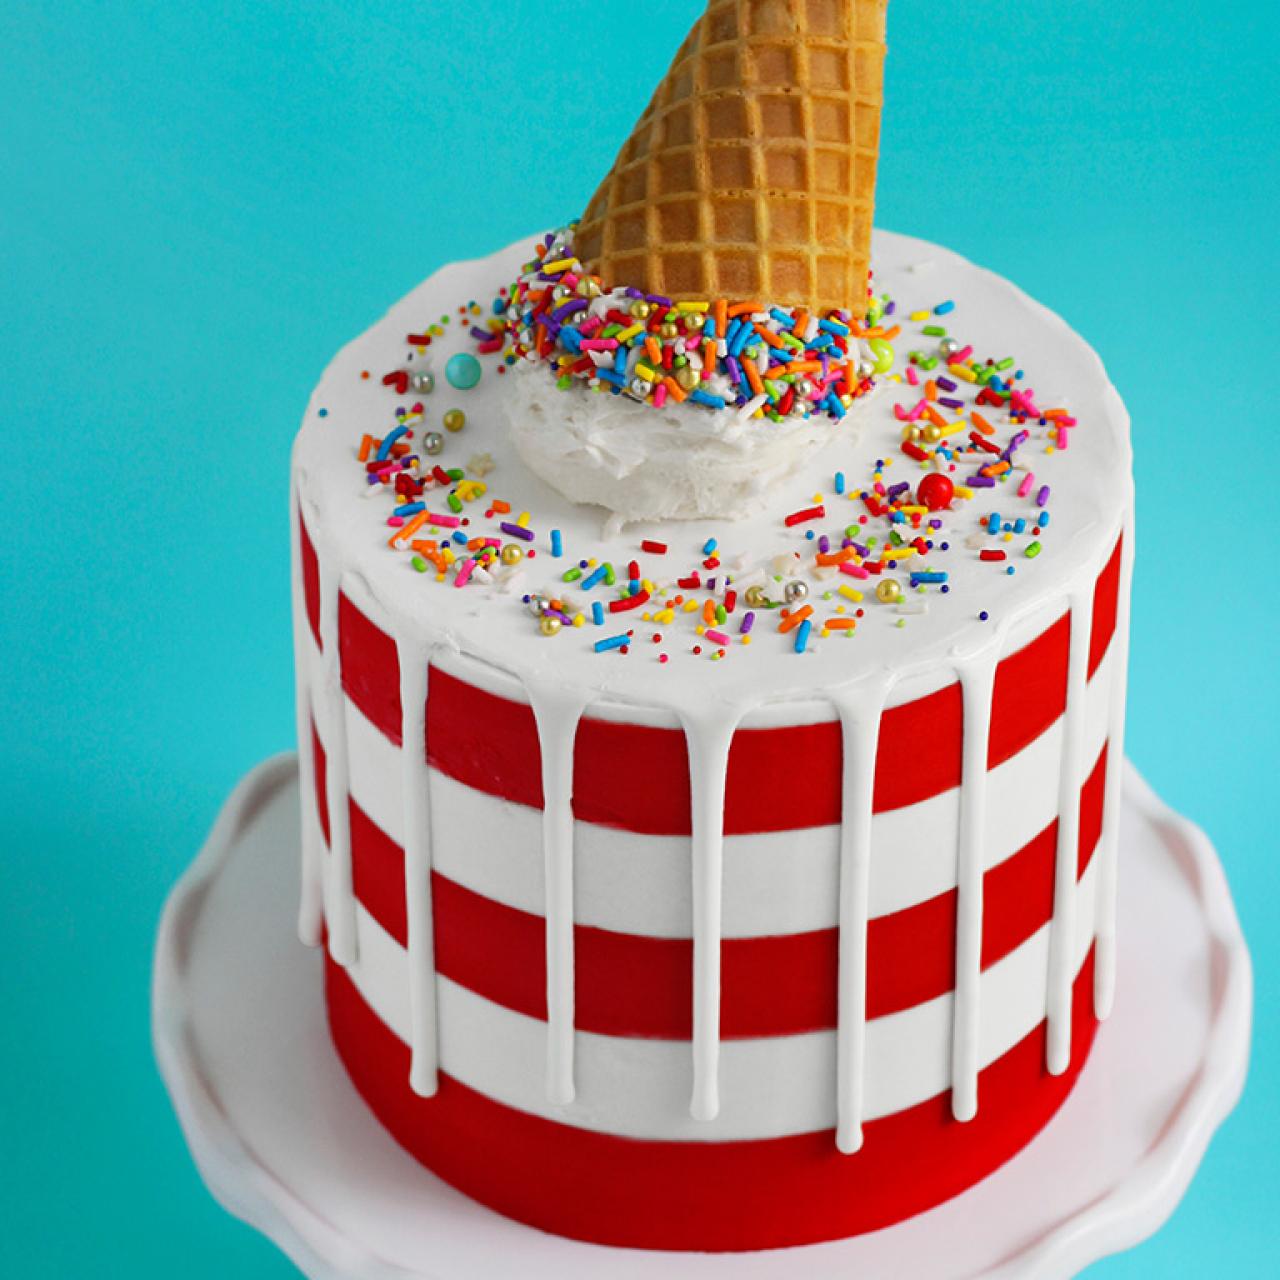 Ice Cream Cone Cupcakes-Minute Video & Blog Tutorial! - My Cake School